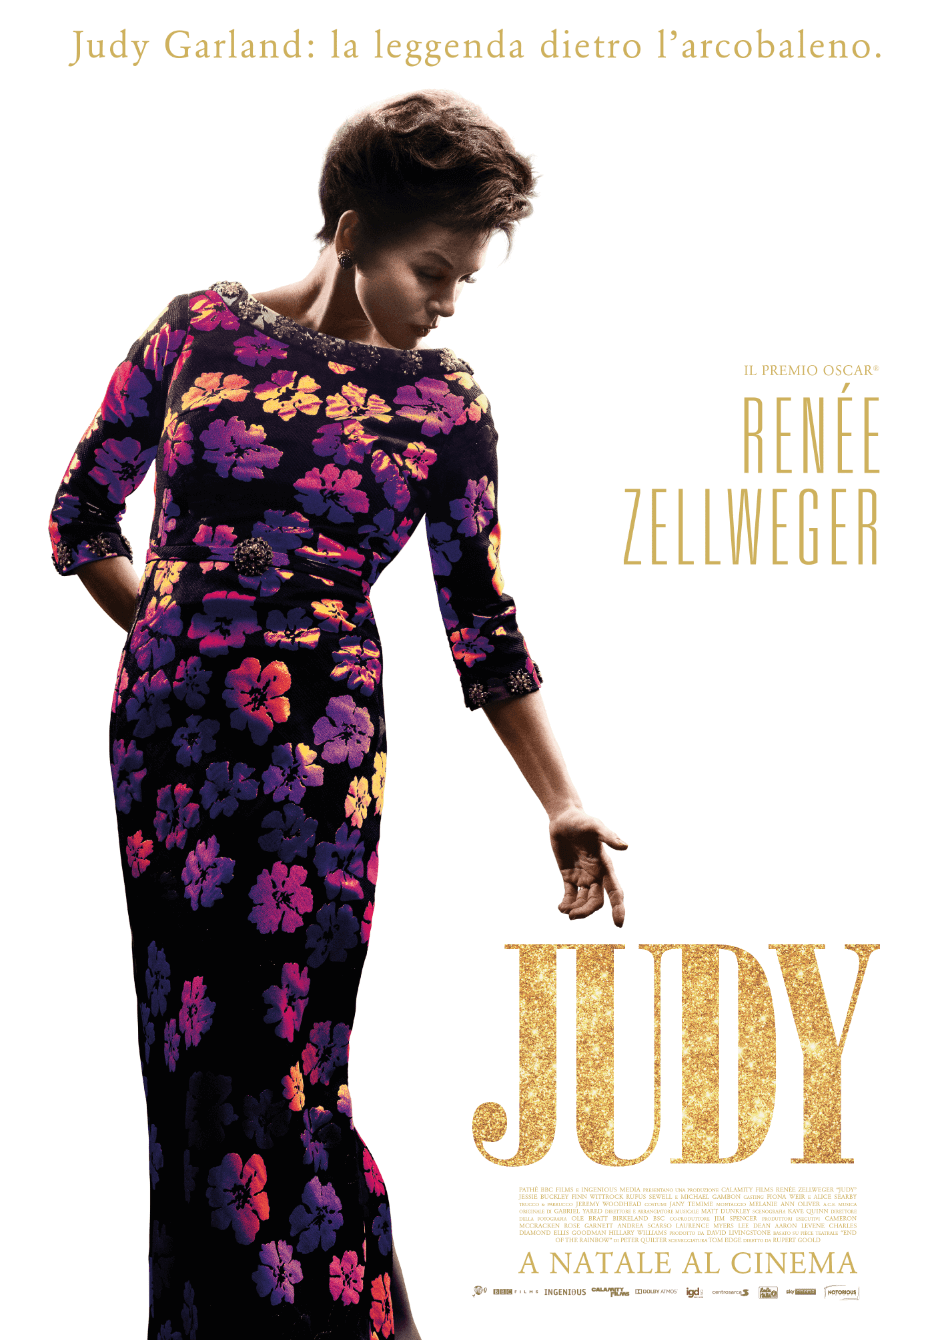 Judy, trailer italiano del biopic con Renée Zellweger nei panni di Judy Garland - Judy trailer italiano dal biopic - Gay.it